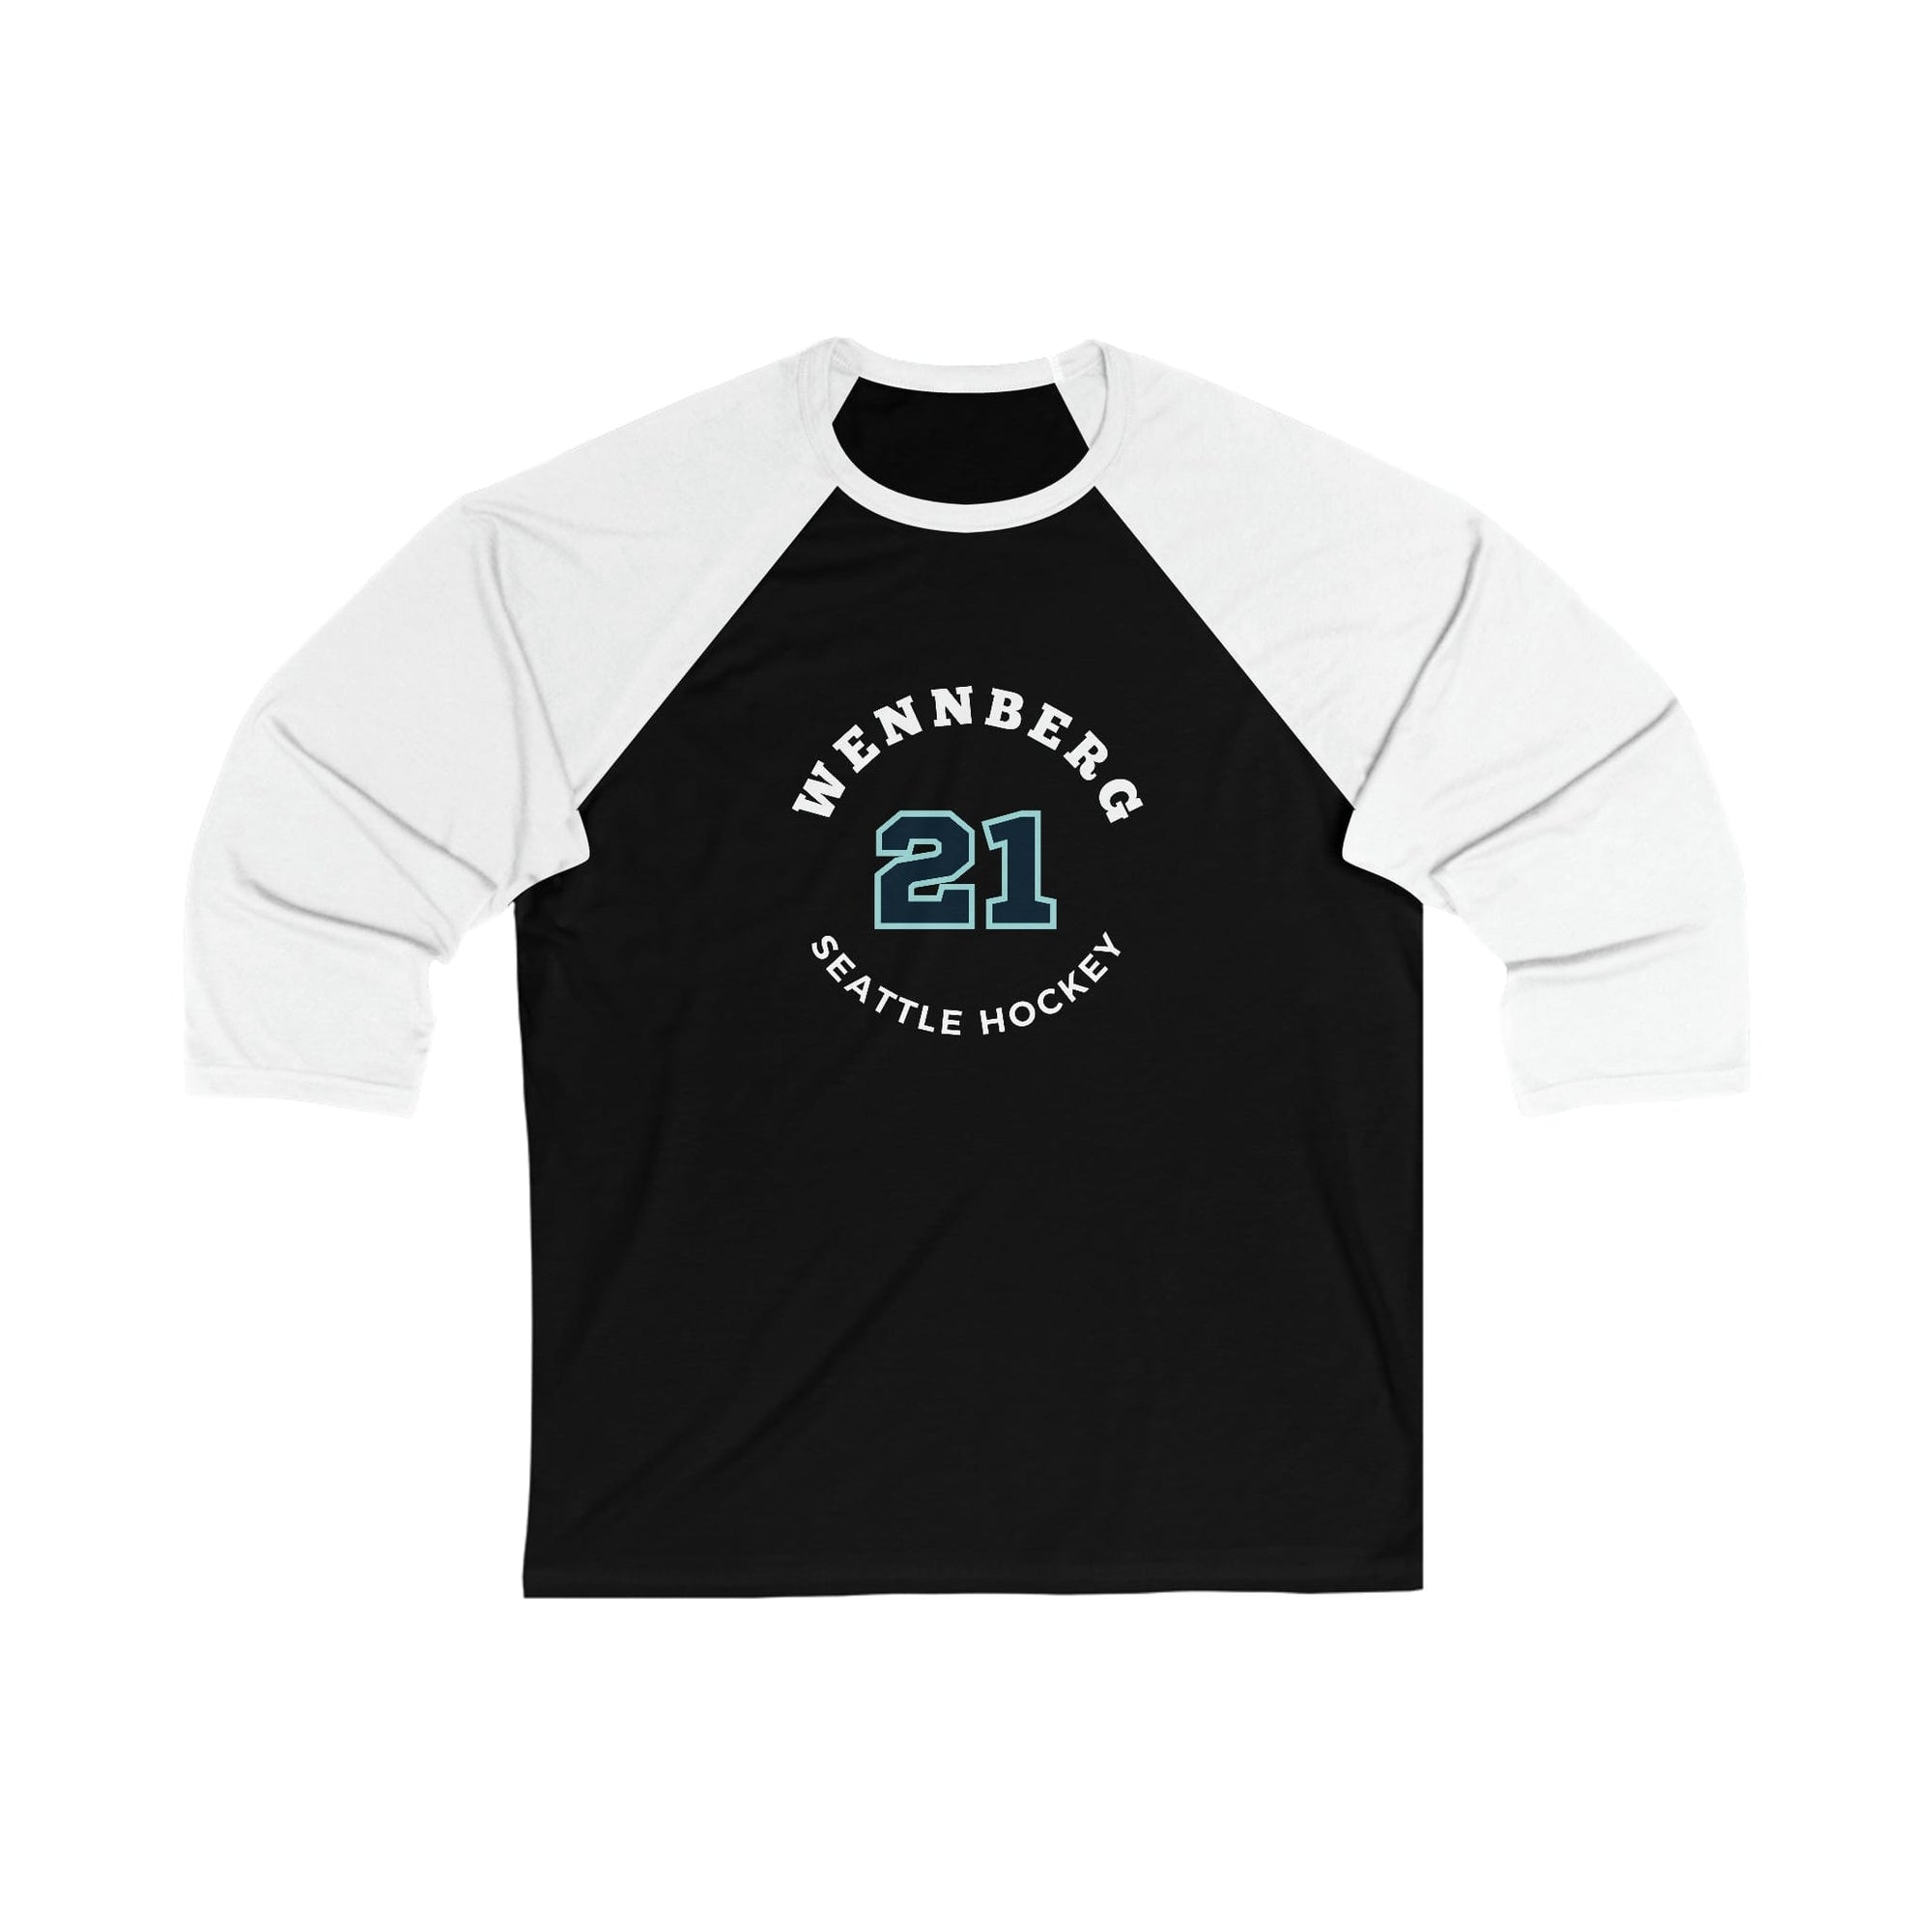 Long-sleeve Wennberg 21 Seattle Hockey Number Arch Design Unisex Tri-Blend 3/4 Sleeve Raglan Baseball Shirt